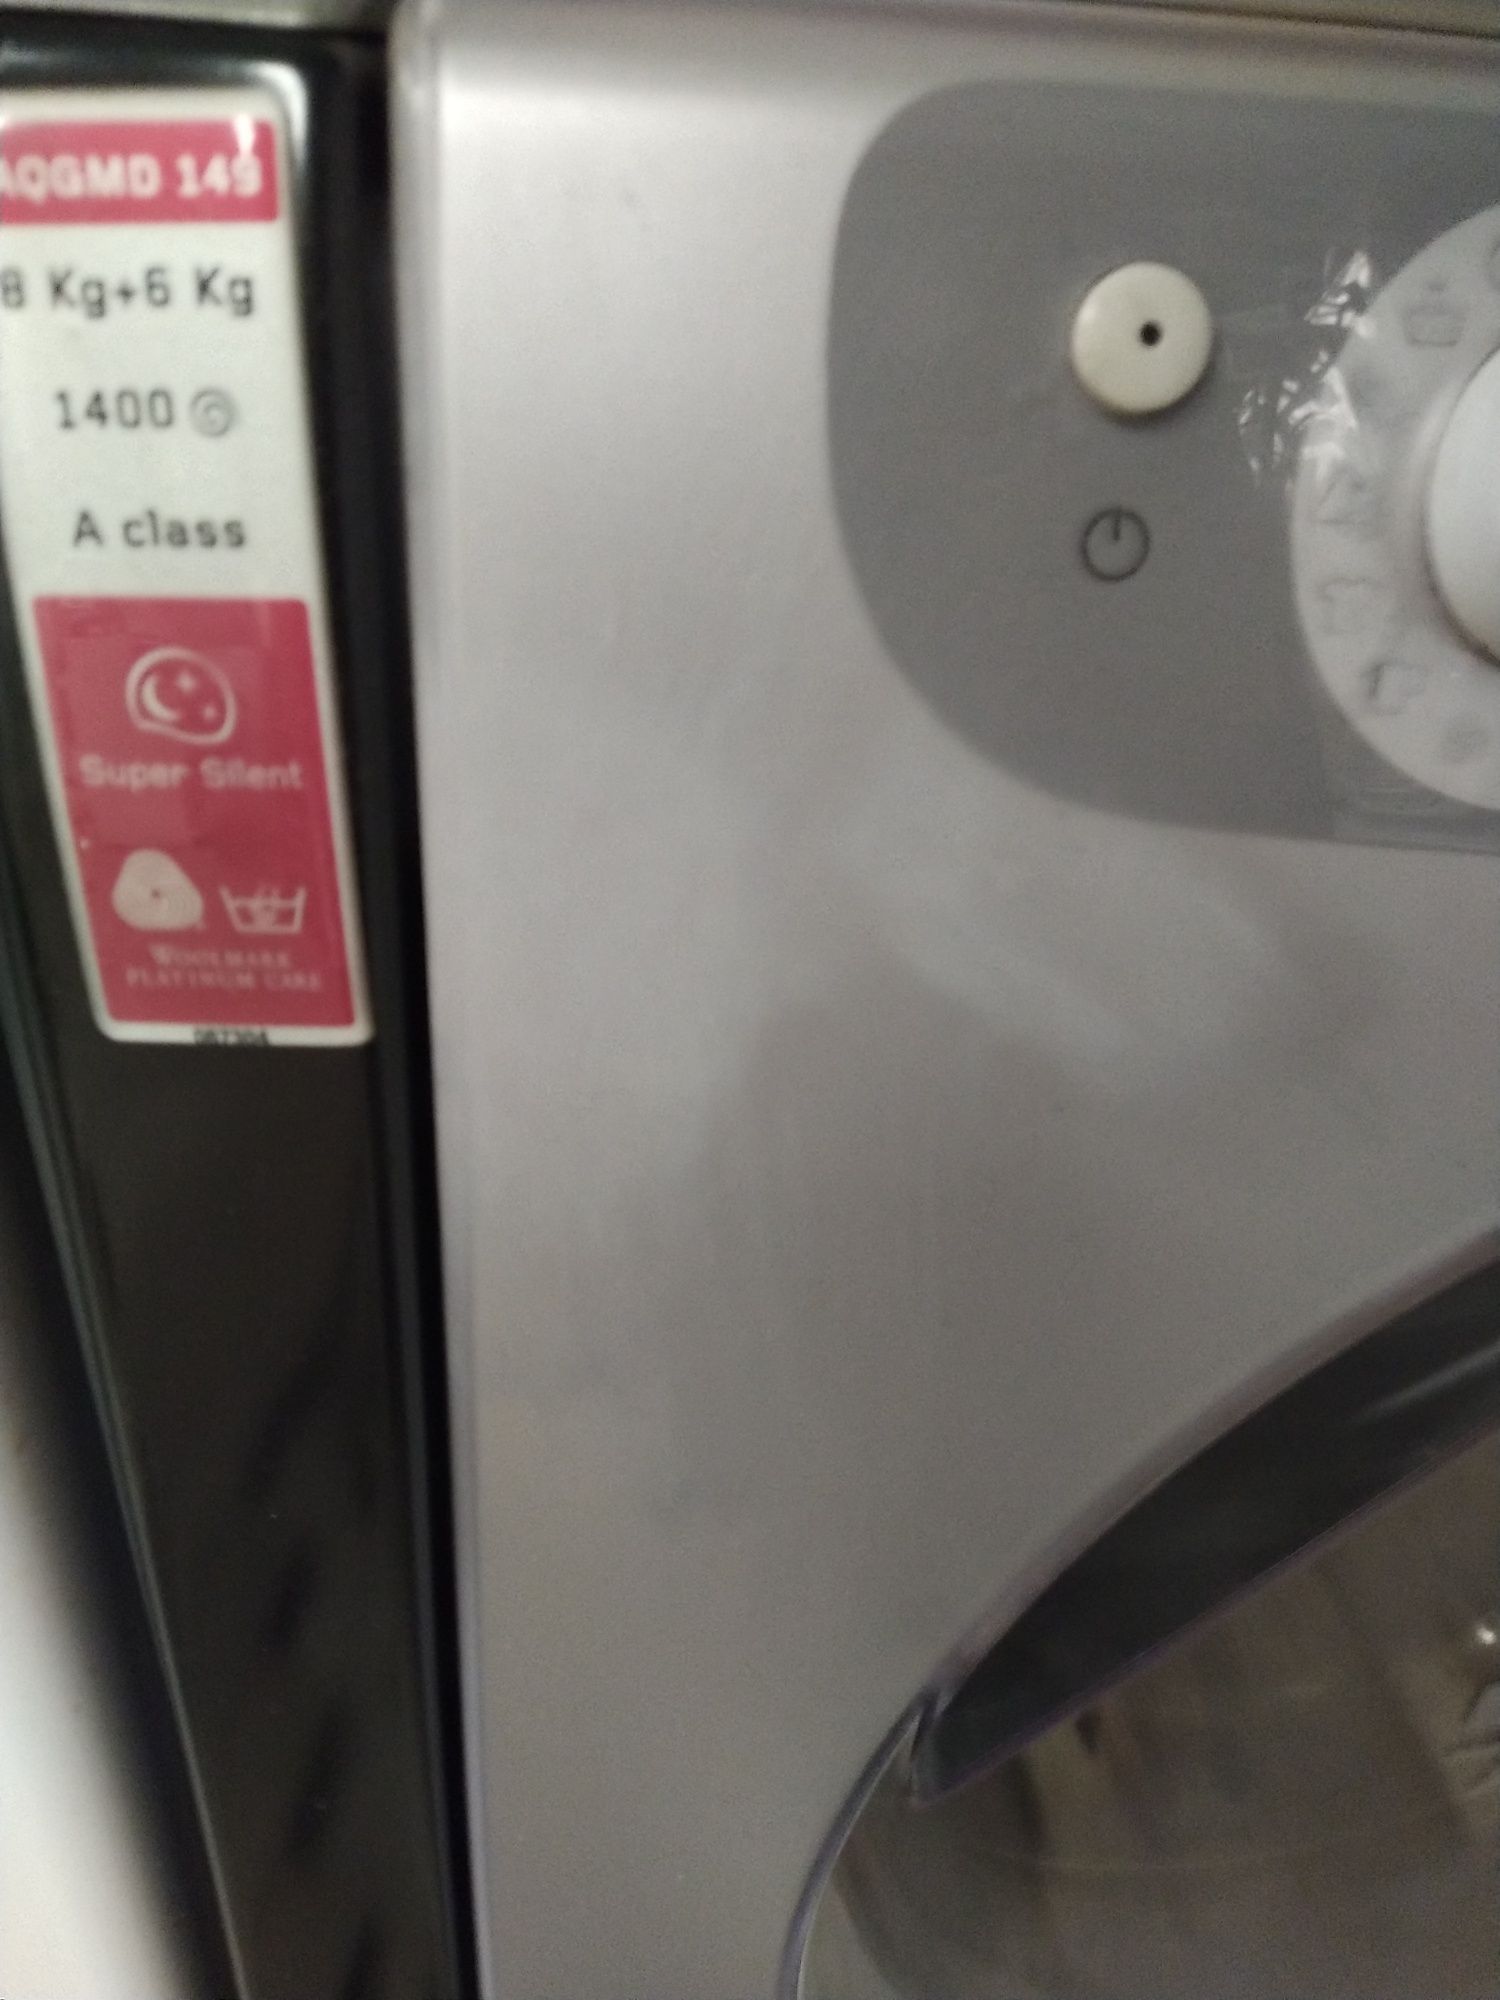 Entrega garantia máquina de lavar roupa e secar Ariston hotpoint 8+6